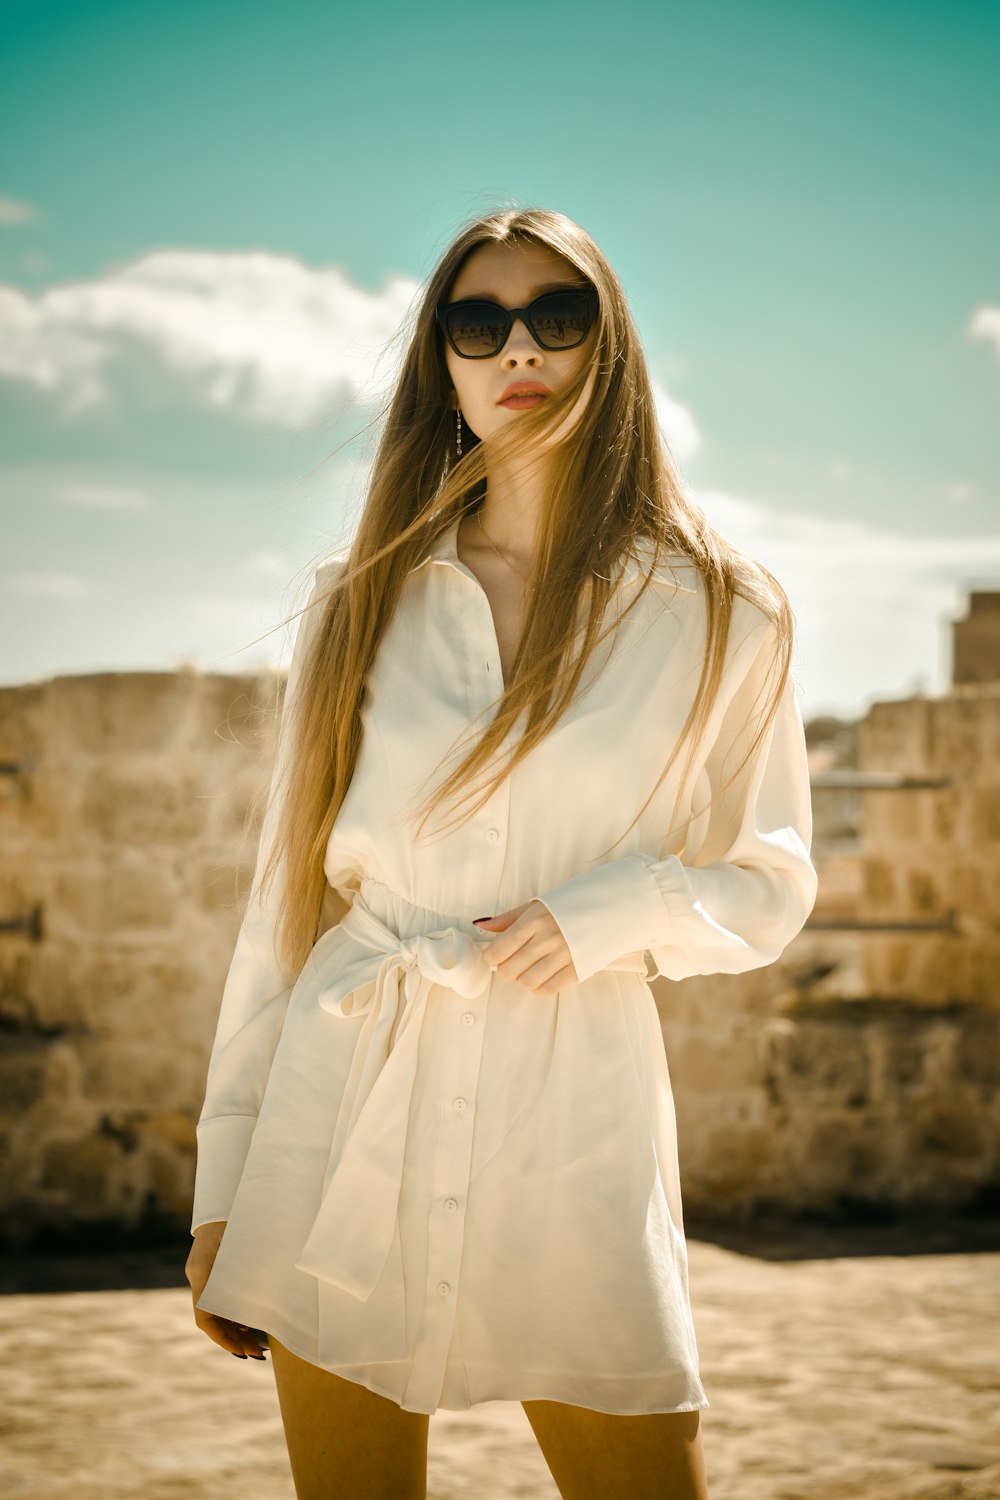 mulher no vestido branco da manga comprida que usa óculos de sol pretos